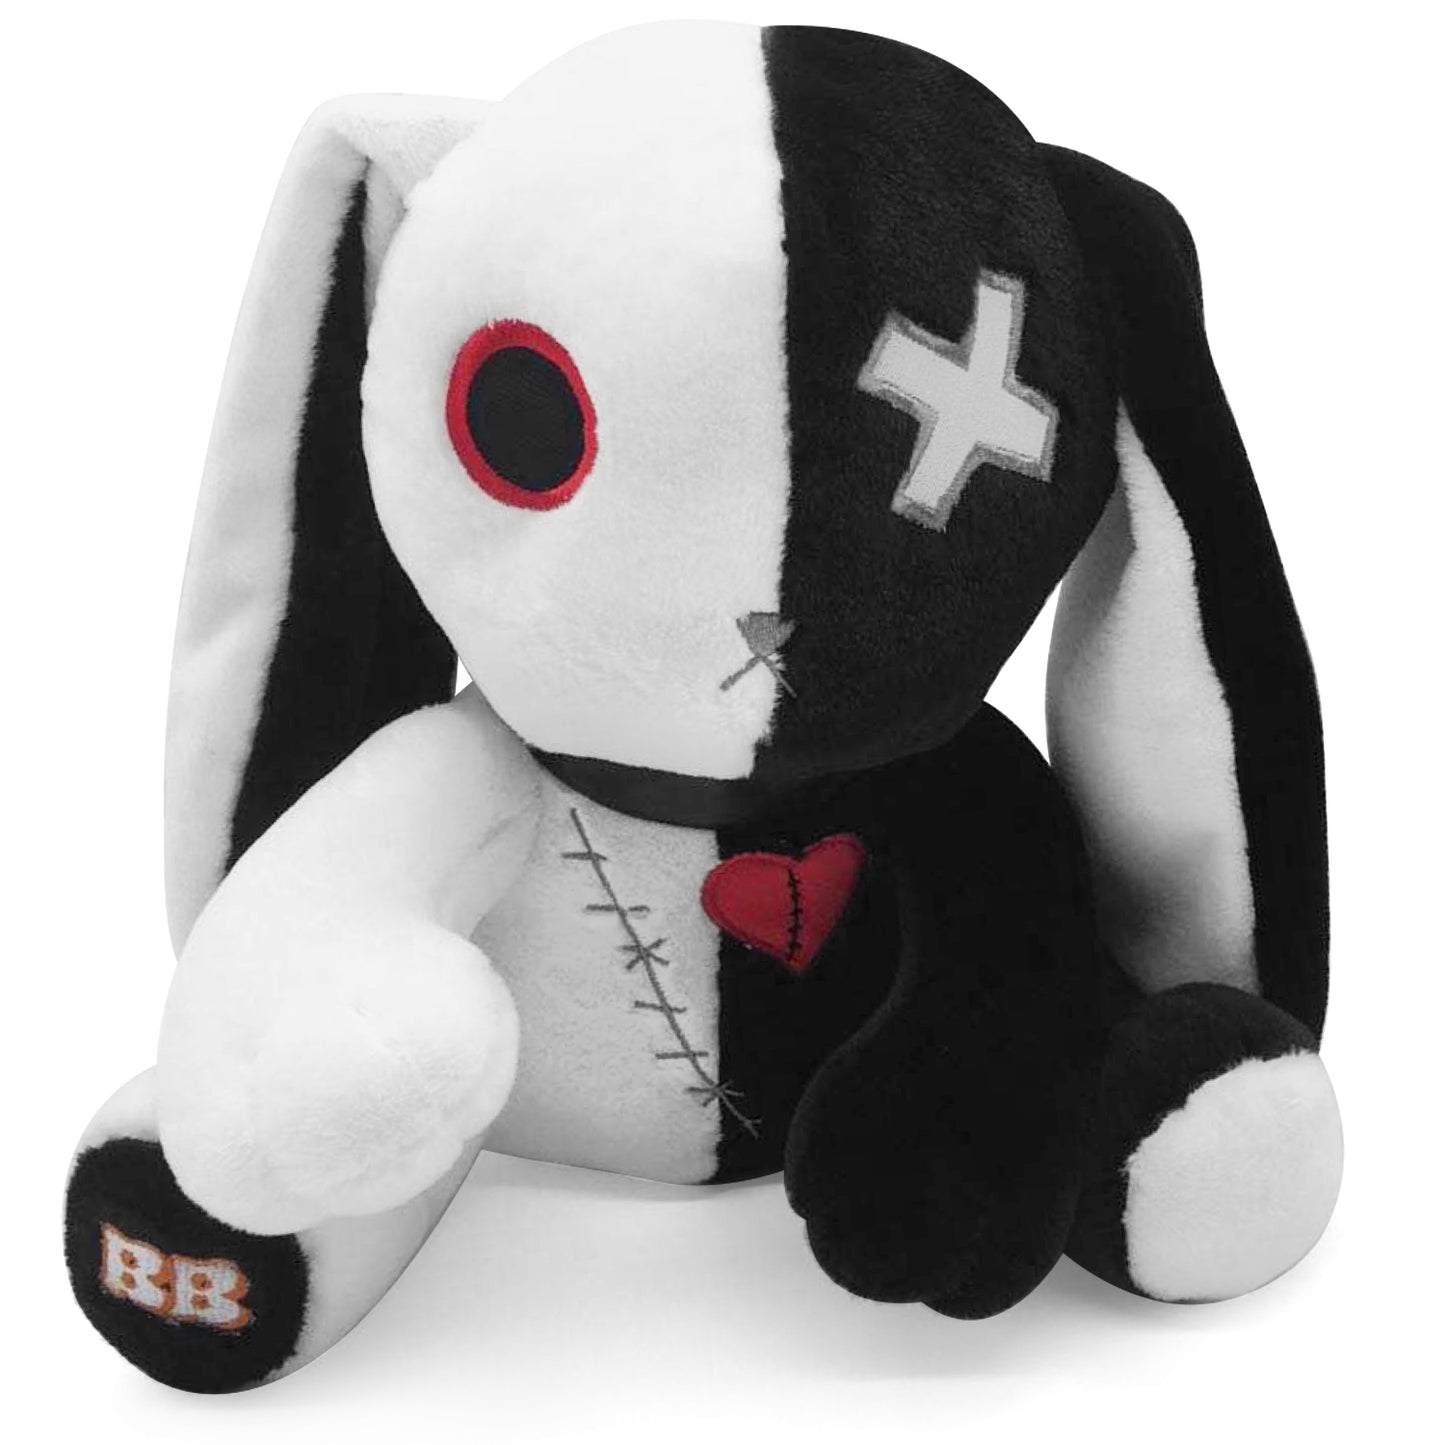 Creepy Bunny Plush Toy Dark Series Rabbit Doll Stuffed Gothic Halloween  Gifts